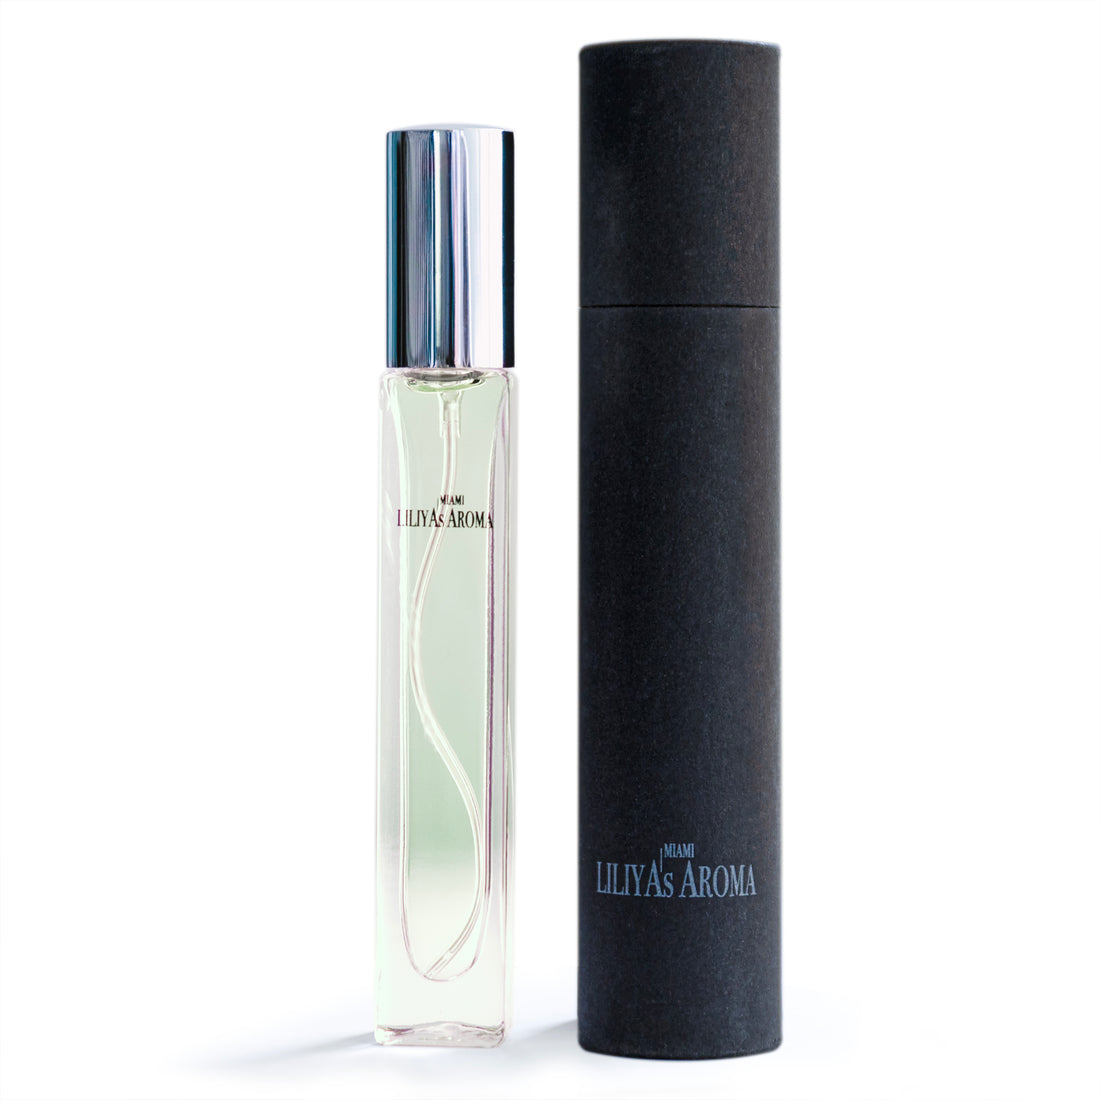 Oud Wood Eau De Parfum Spray, Private Blend, Mysterious Allure of the Middle East, Travel Size 0.35 Fl Oz | 10ml